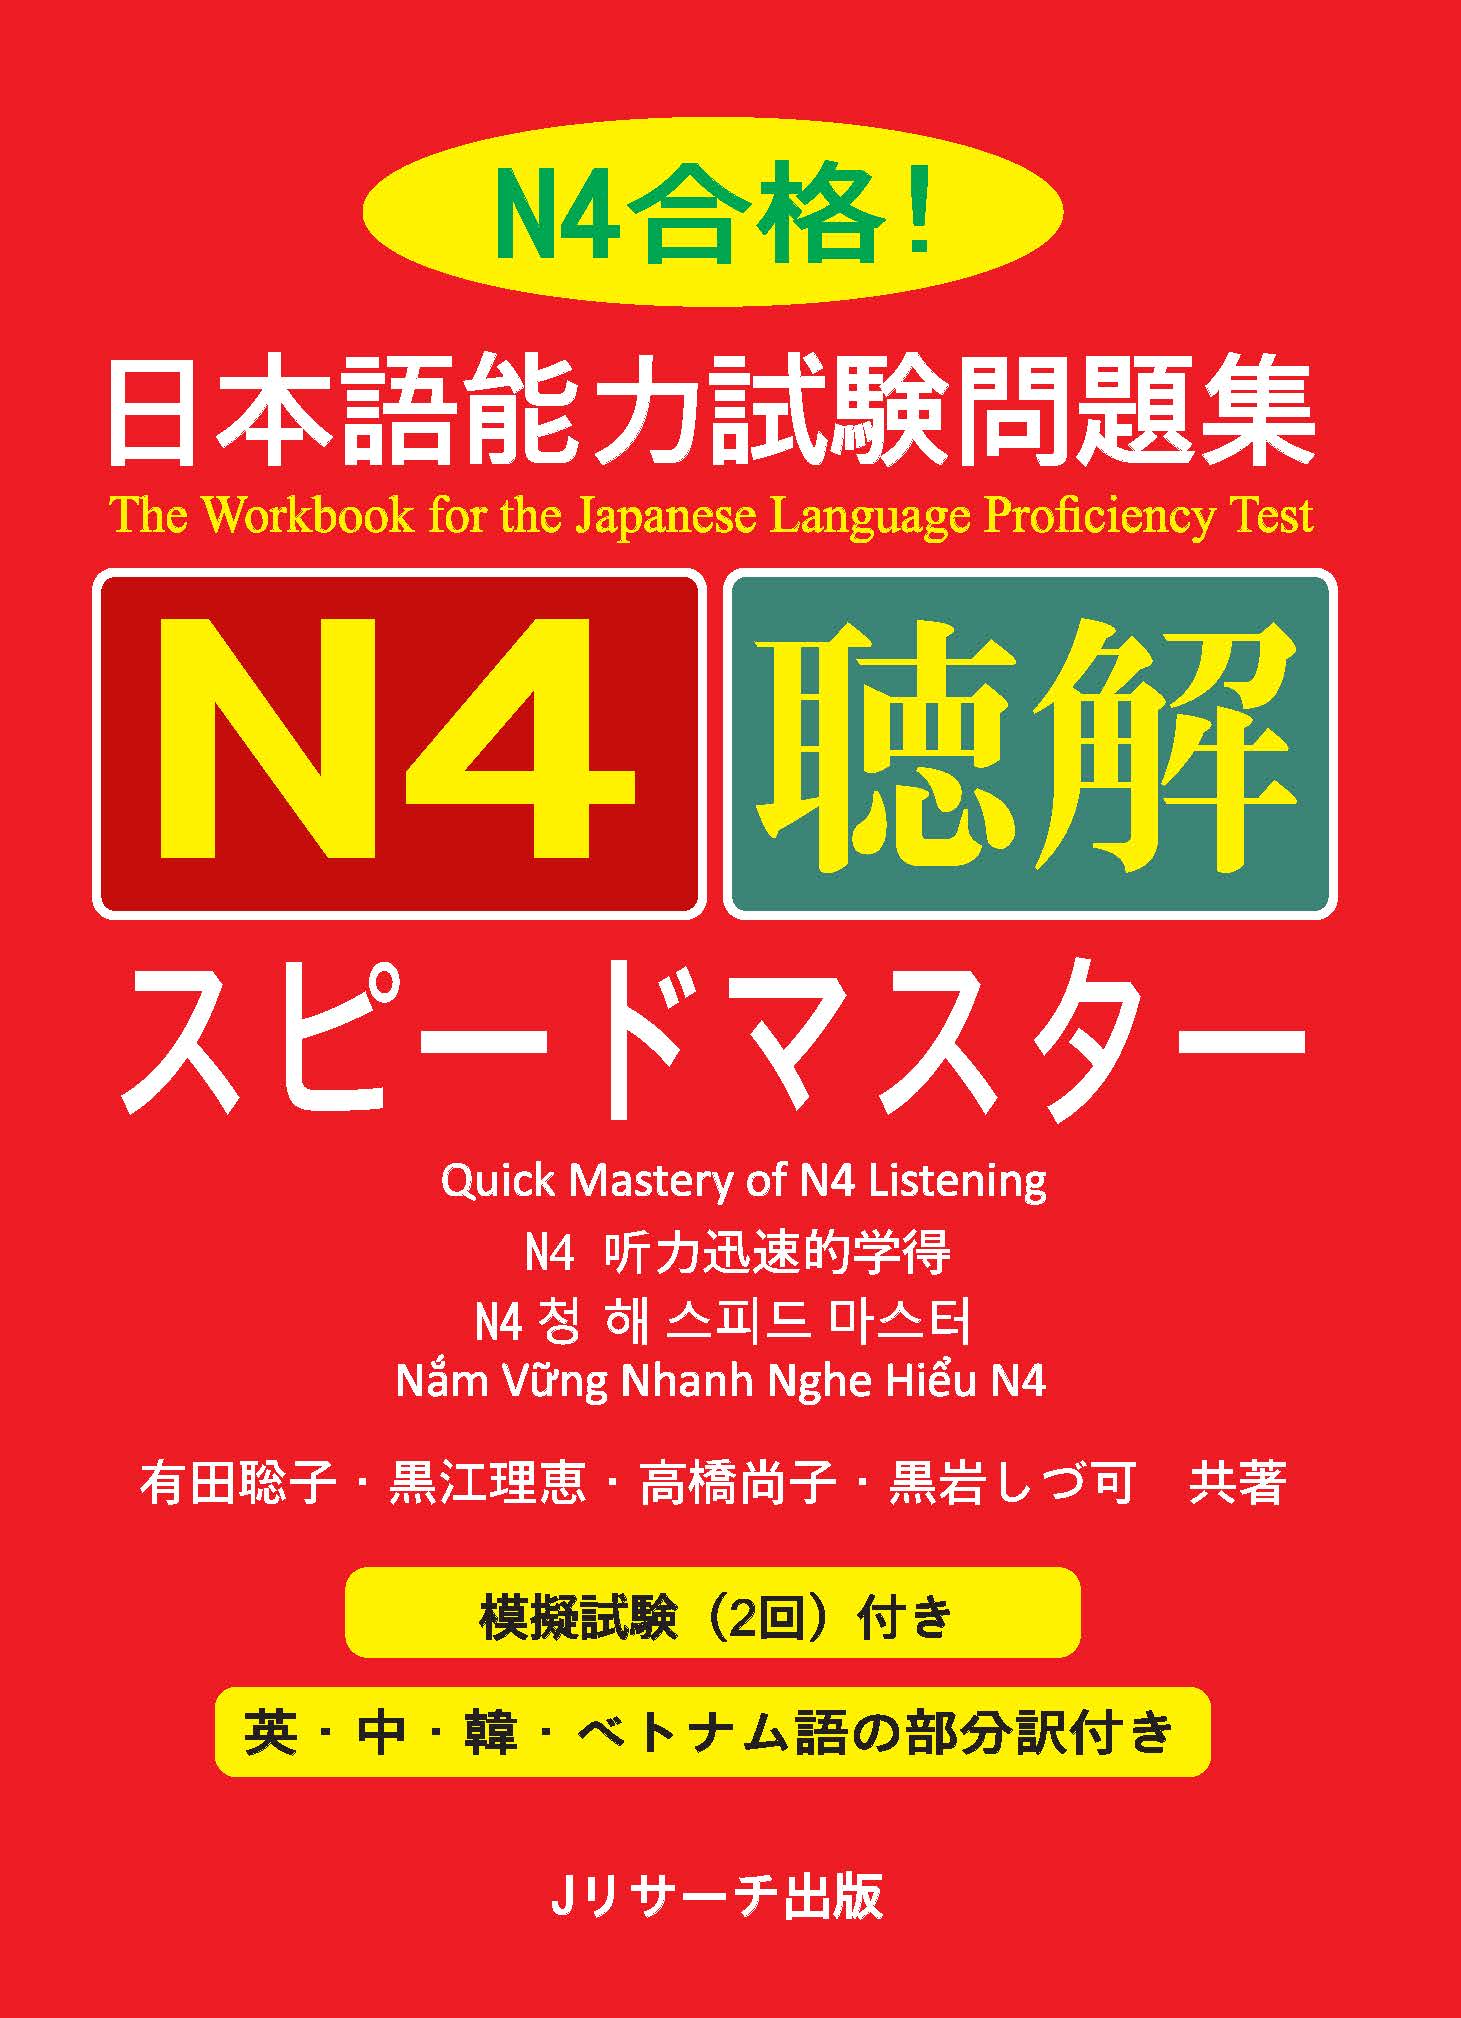 Giáo Trình Speed Master N4 – Phần Nghe Hiểu CHOUKAI | 日本語能力試験問題集 N4聴解スピードマスター